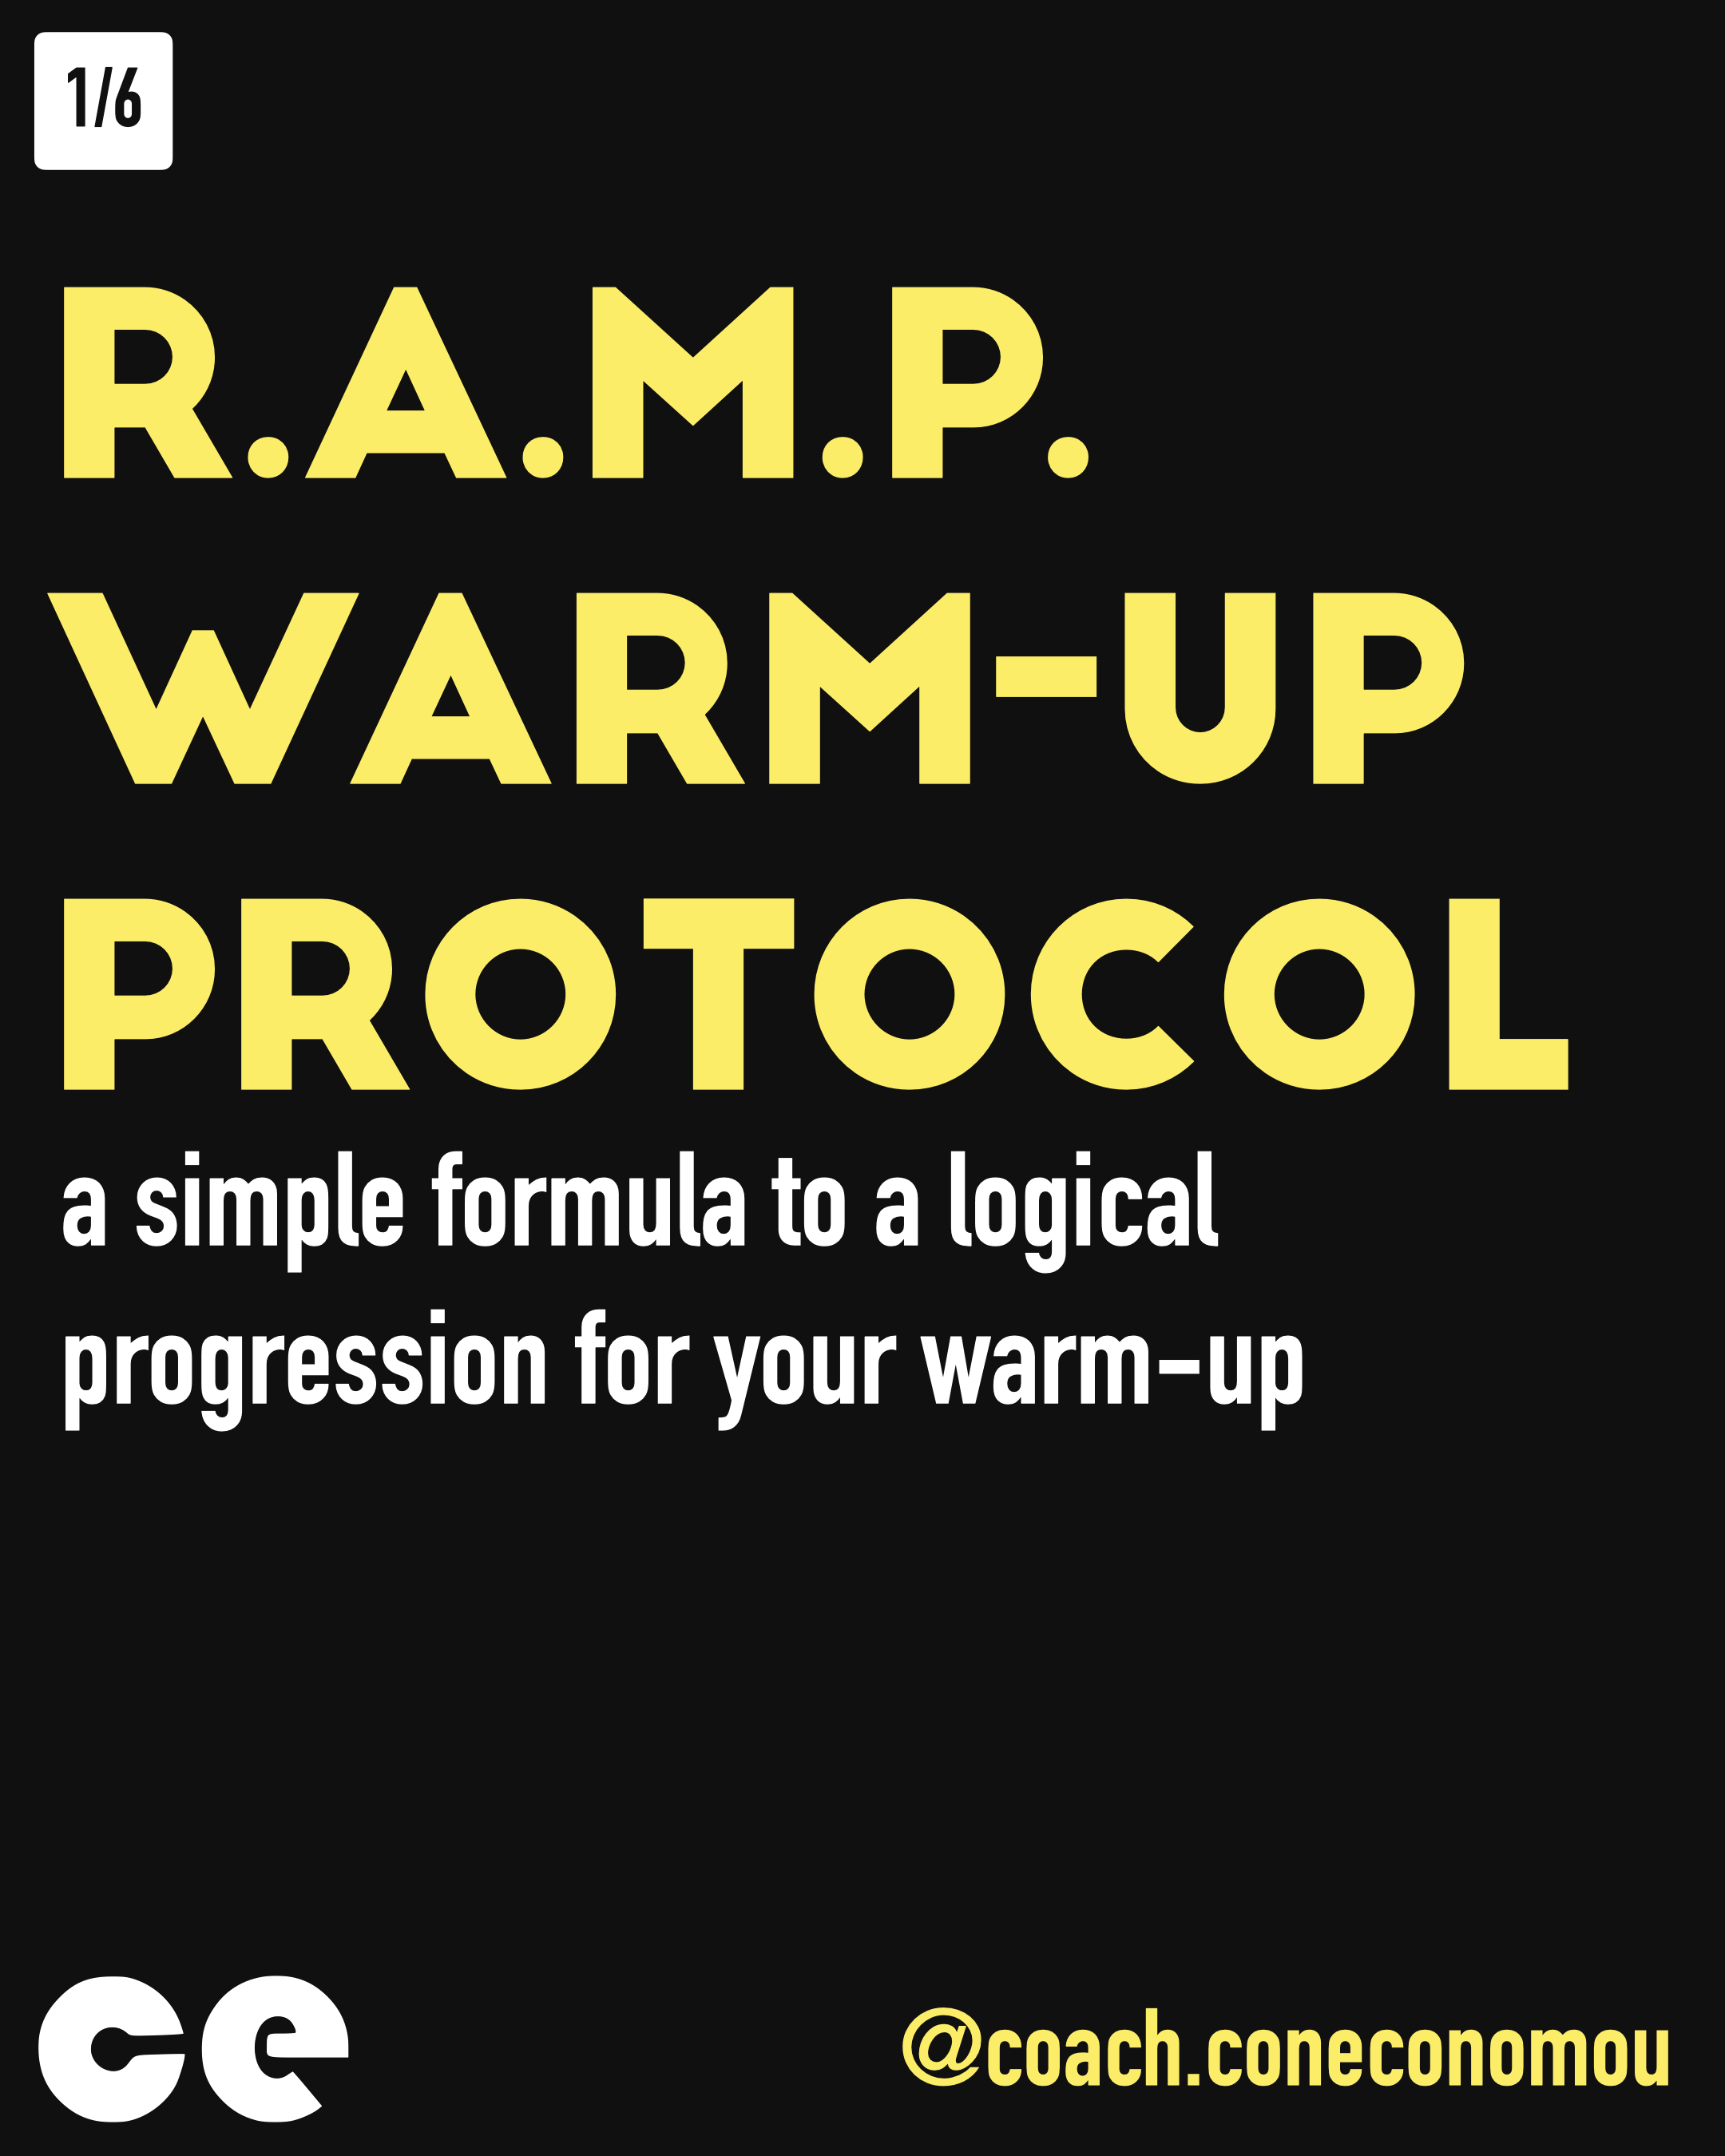 RAMP protocol post.001.png